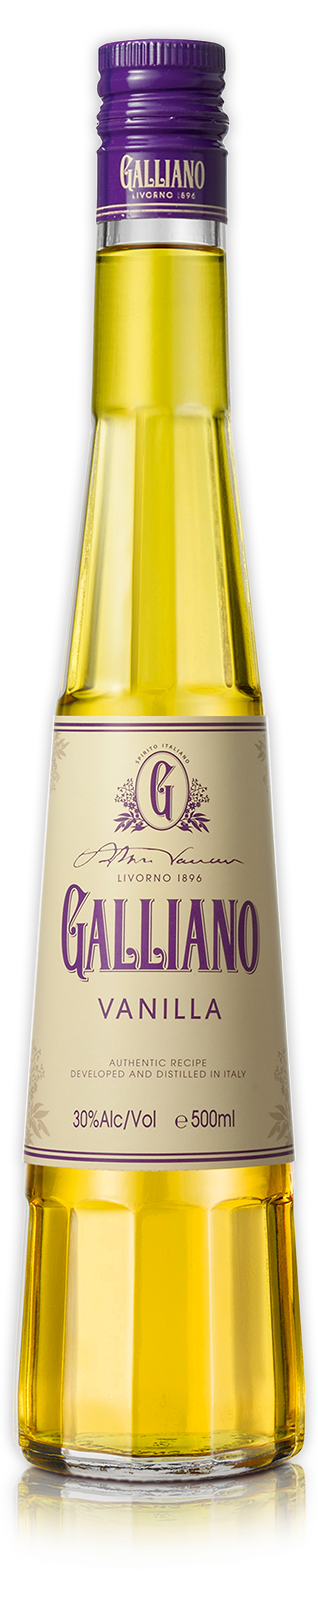 Galliano Vanilla 500ml - Liquor Library